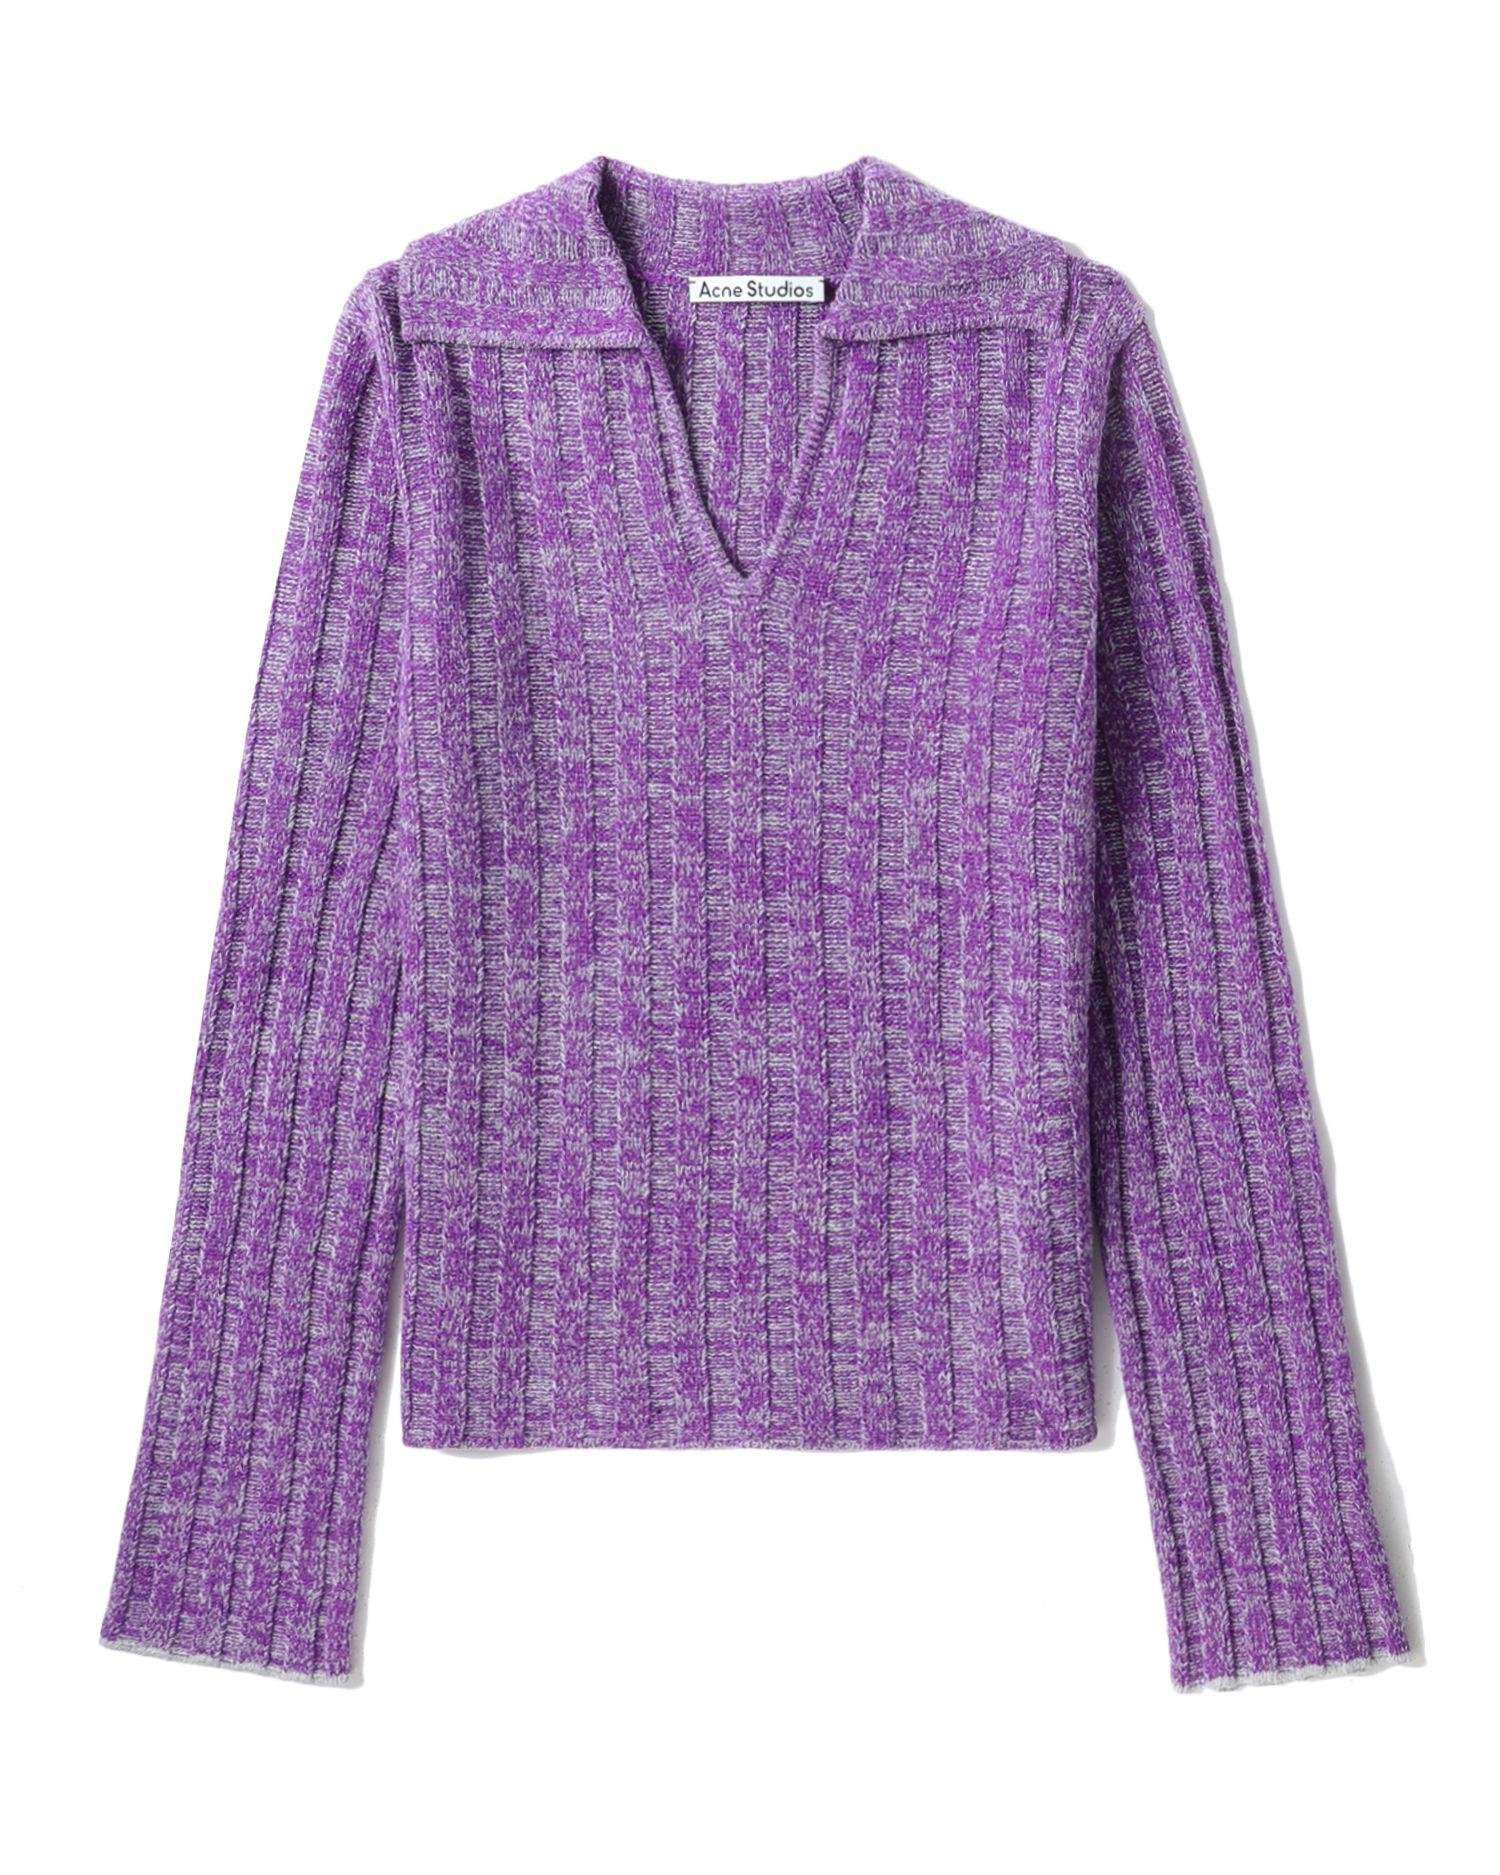 Polo V-neck knit sweater by ACNE STUDIOS